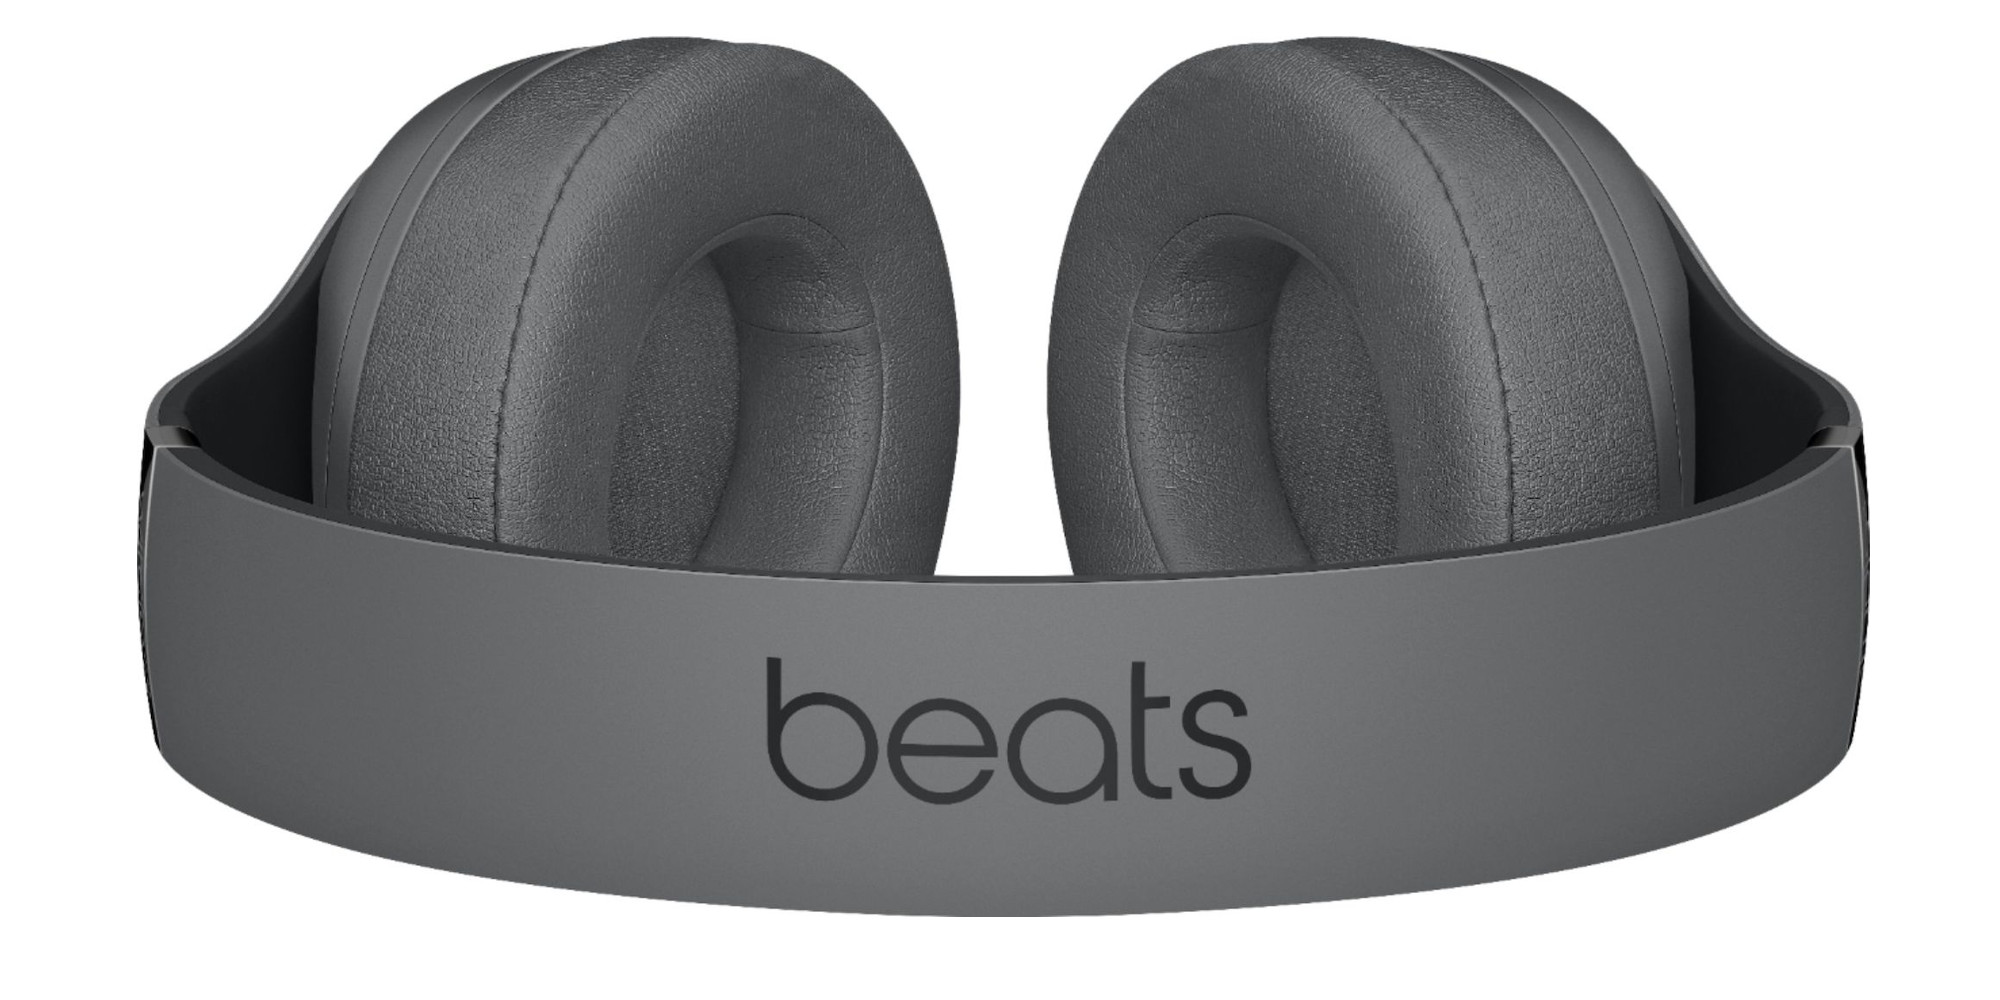 beats headphones with w1 chip